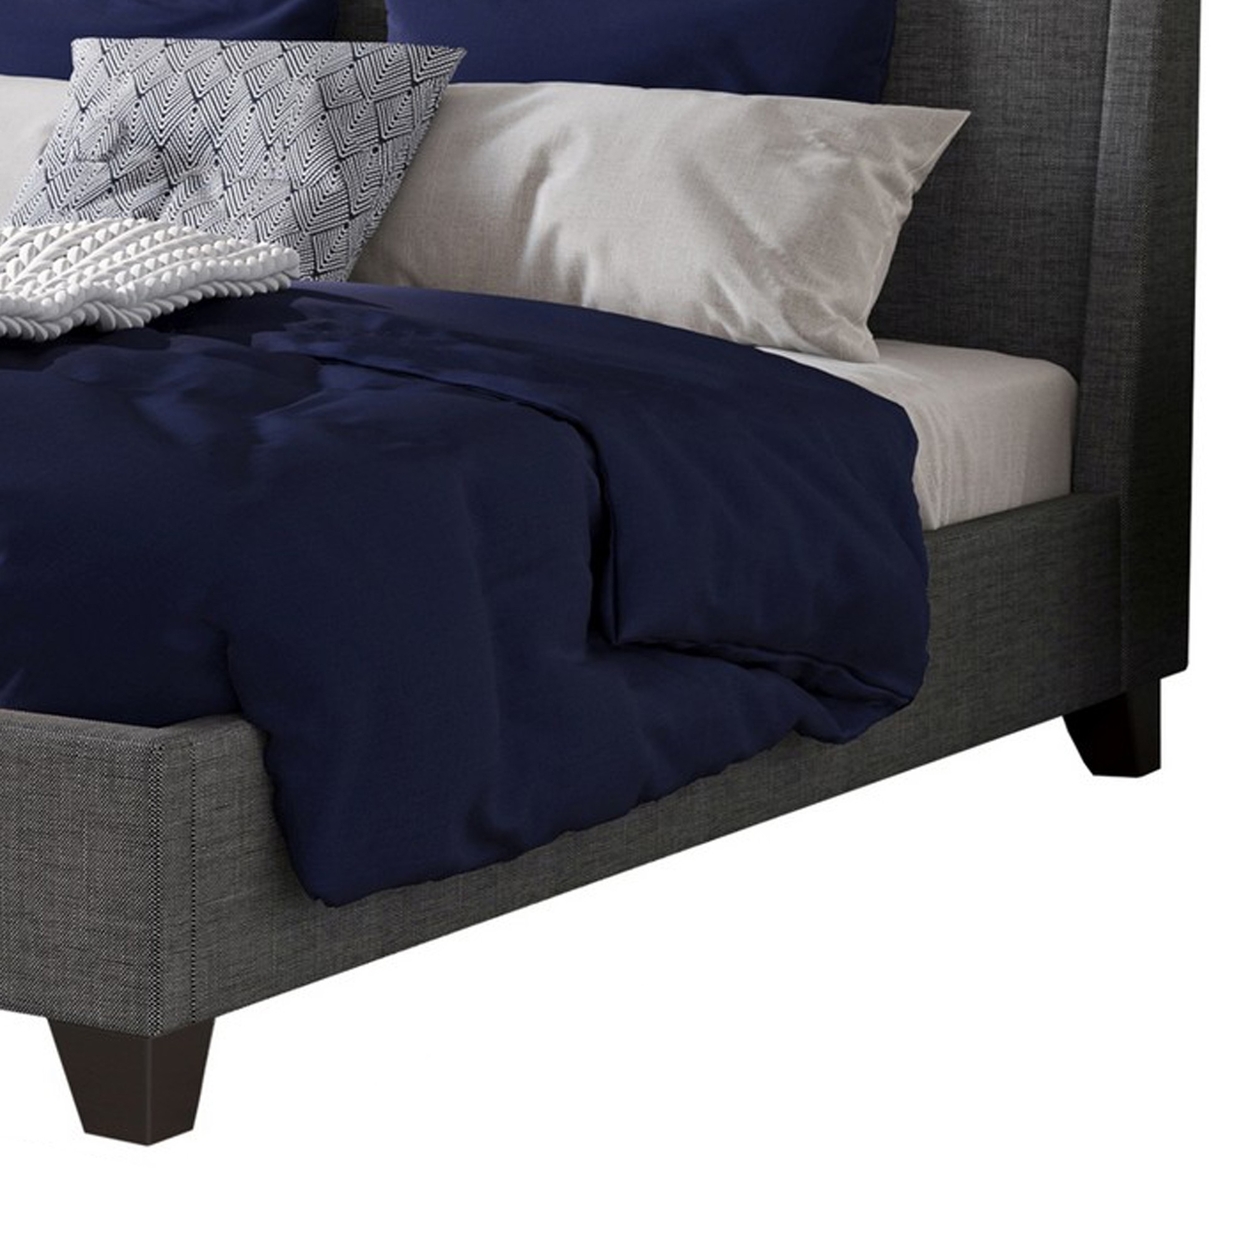 Atina Full Bed, Dark Charcoal Gray Linen Upholstered, Slanted Headboard - Saltoro Sherpi